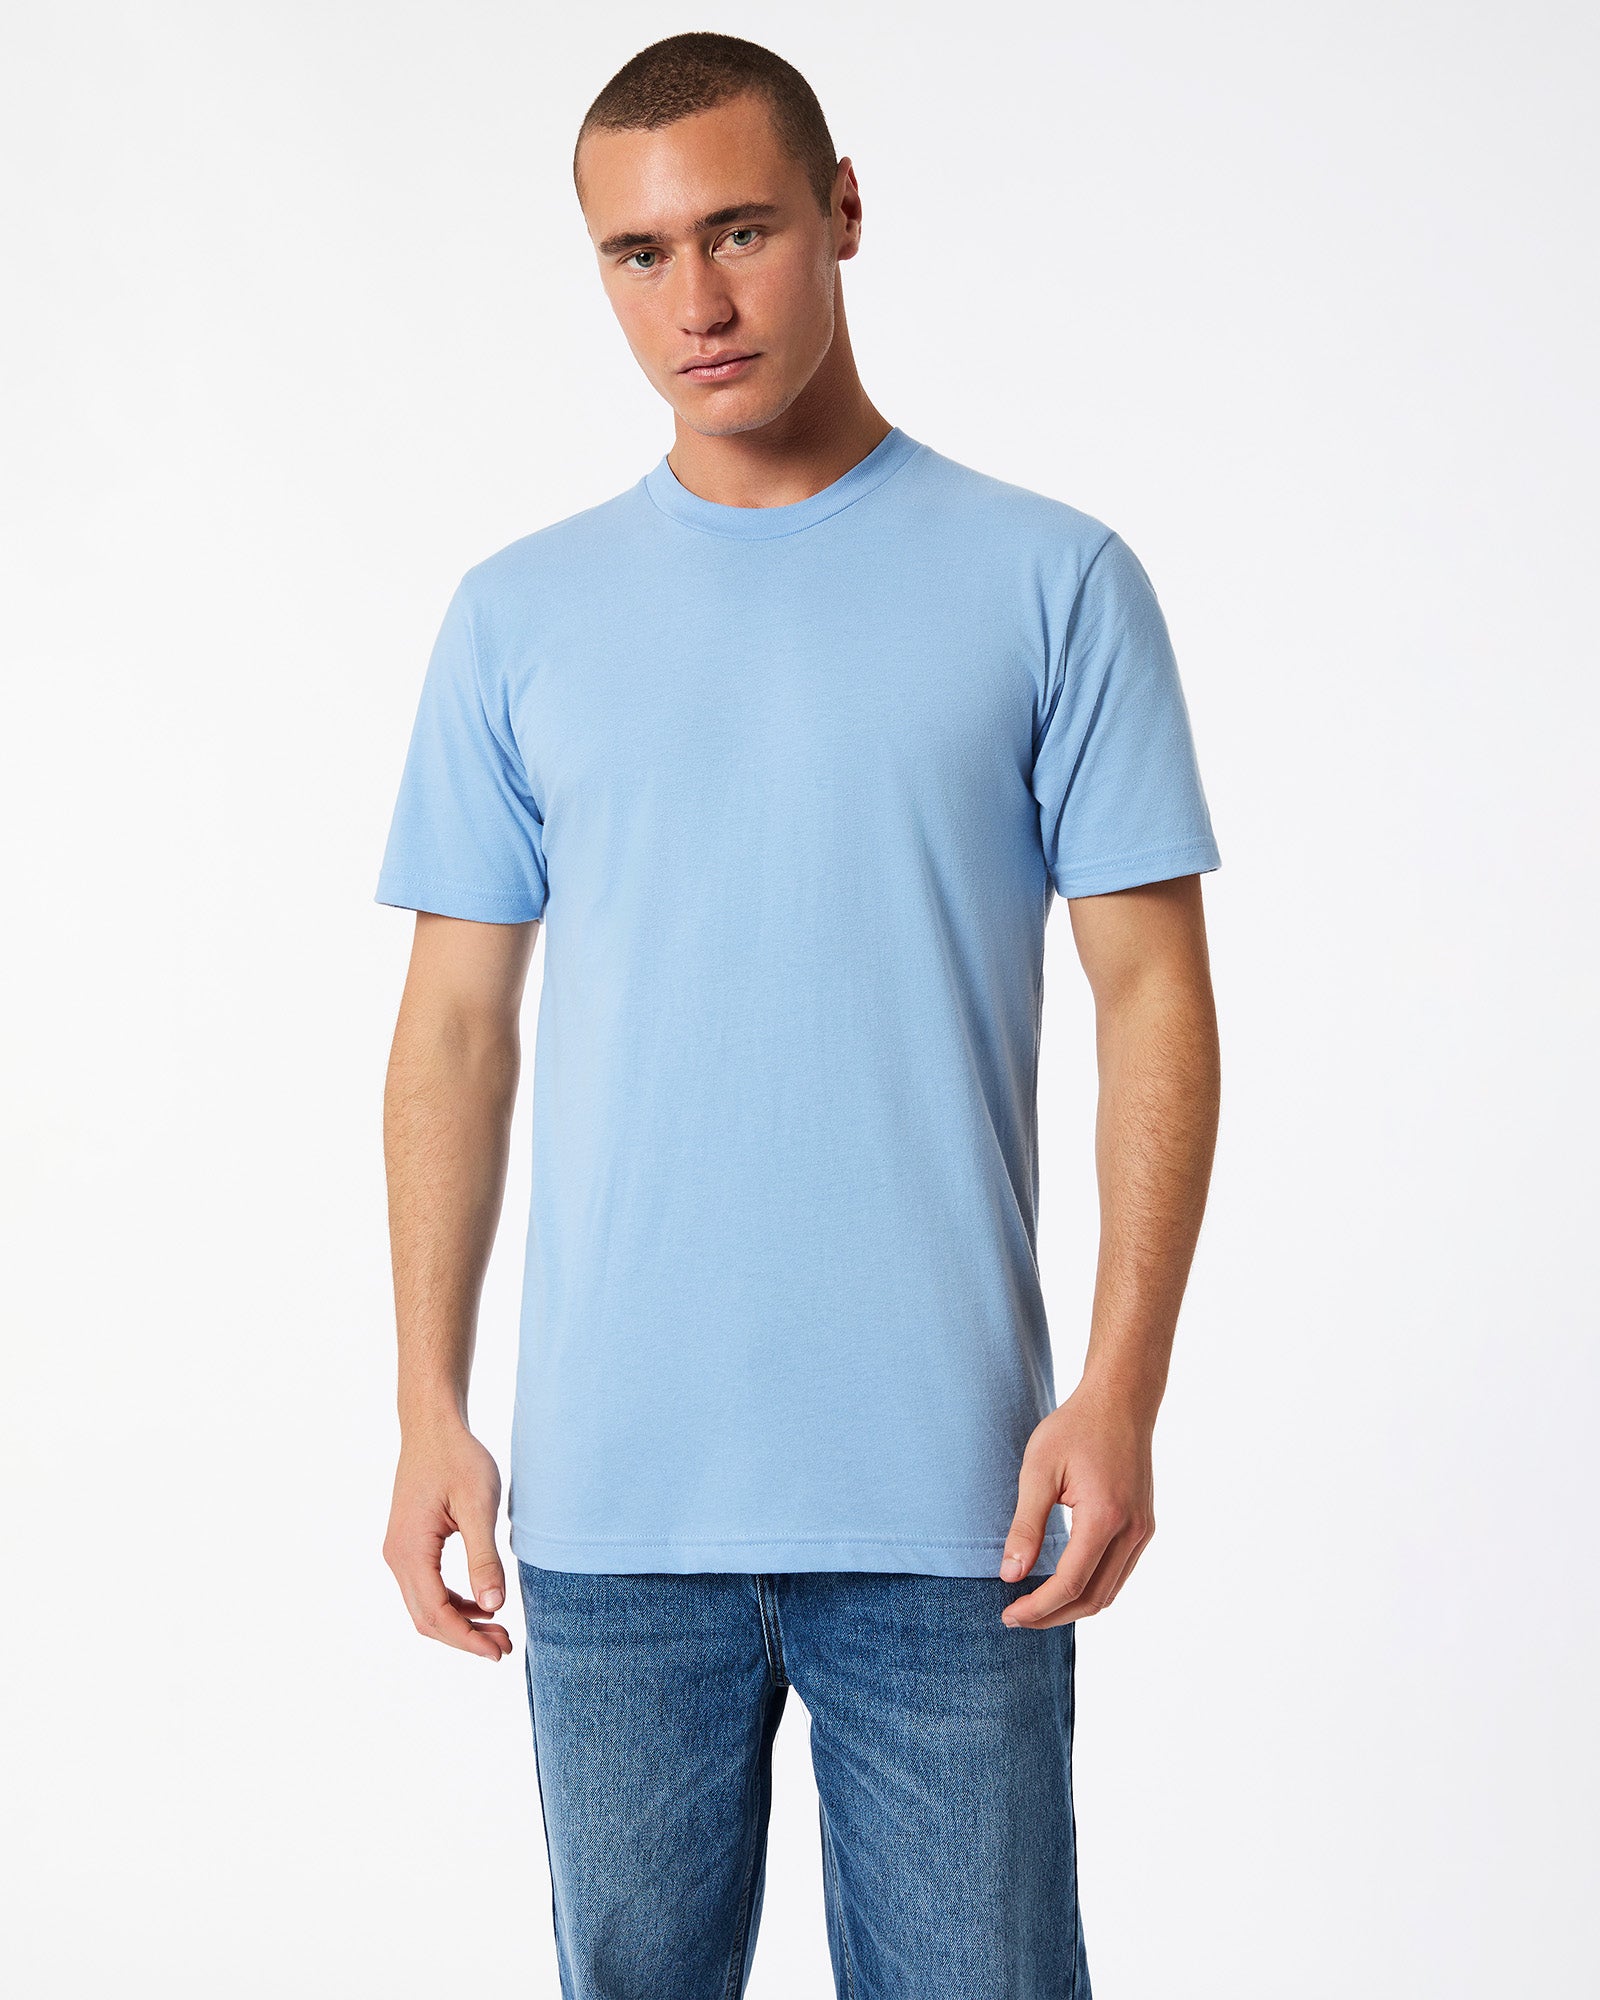 Fine Jersey Unisex Short Sleeve T-Shirt - Powder Blue